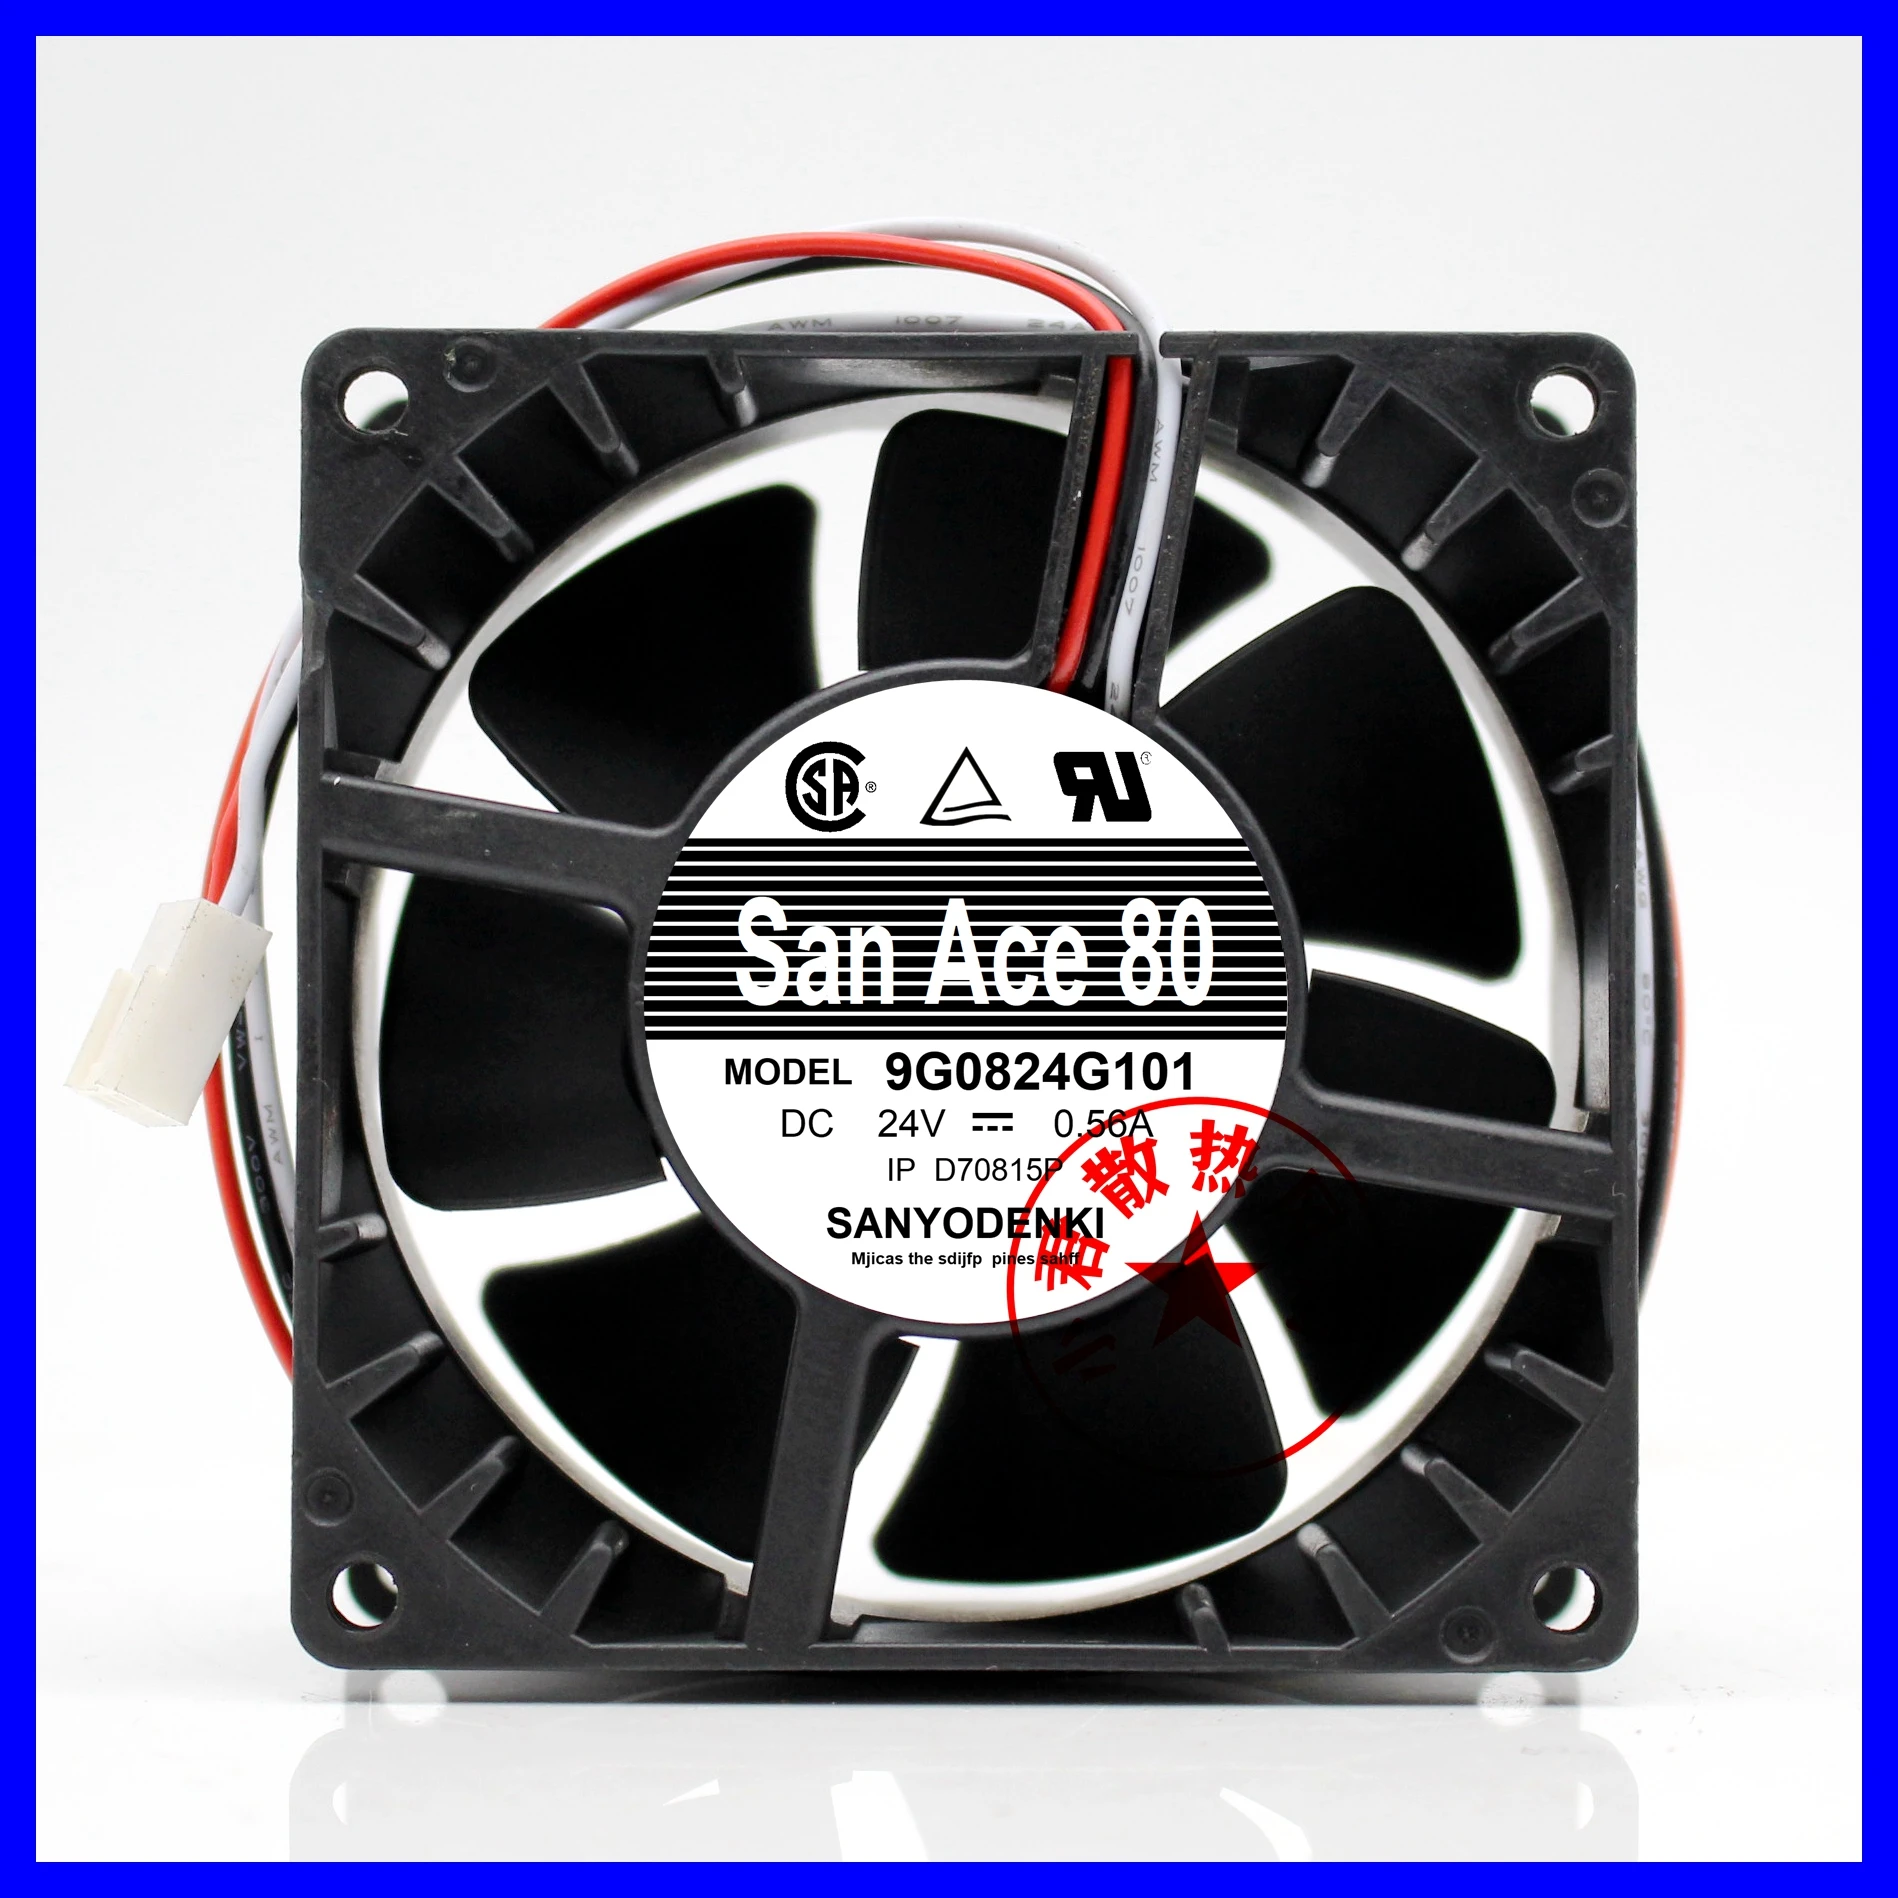 

Sanyo Denki 9G0824G101 DC 24V 0.56A 80x80x38mm 3-Wire Server Cooling Fan